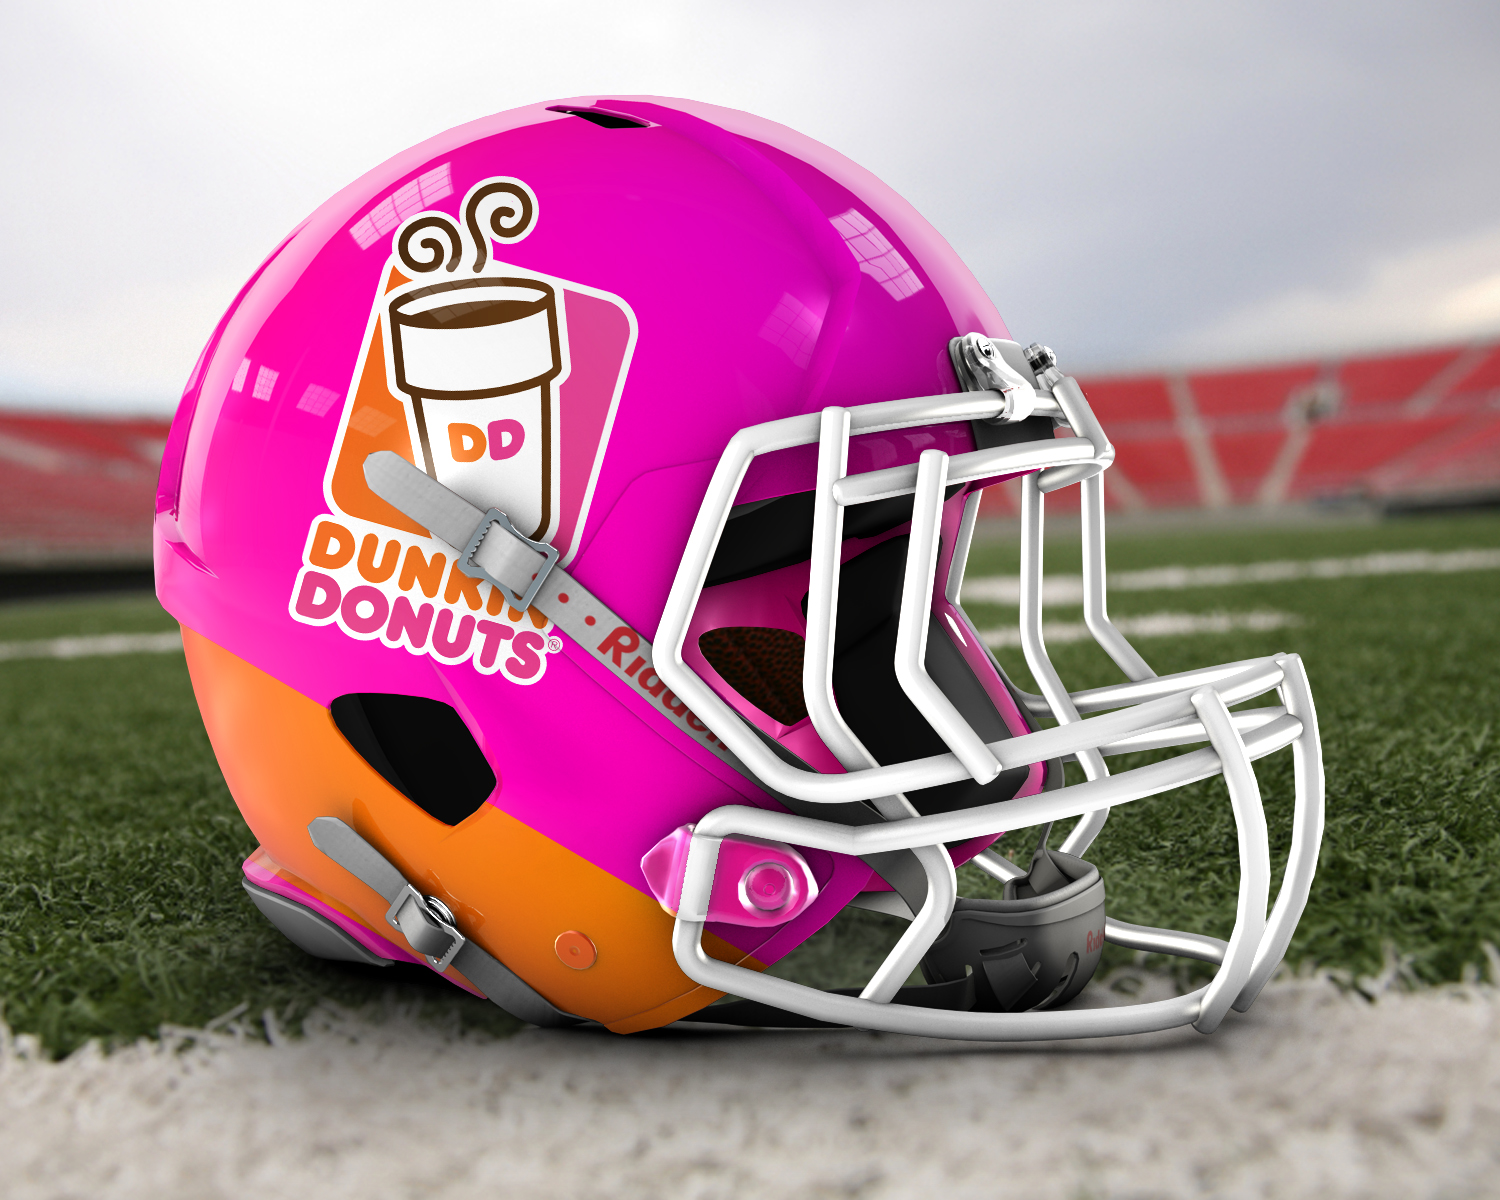 helmet texas longhorns football - Dd Dunk Donuts Riau